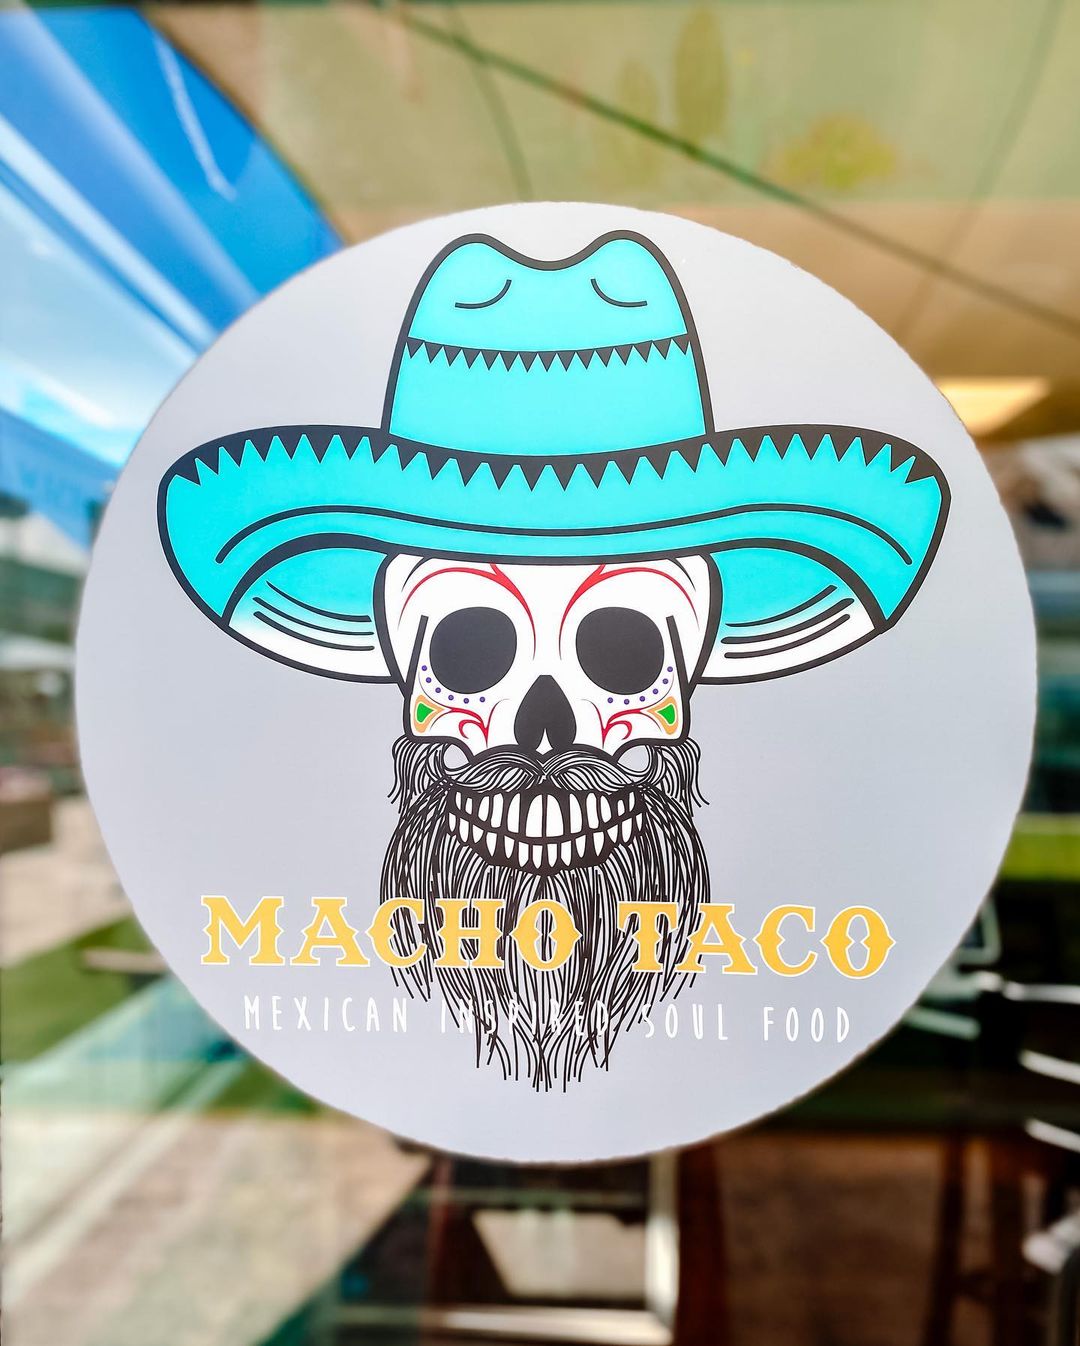 30A Restaurants - Macho Taco - Original Photo